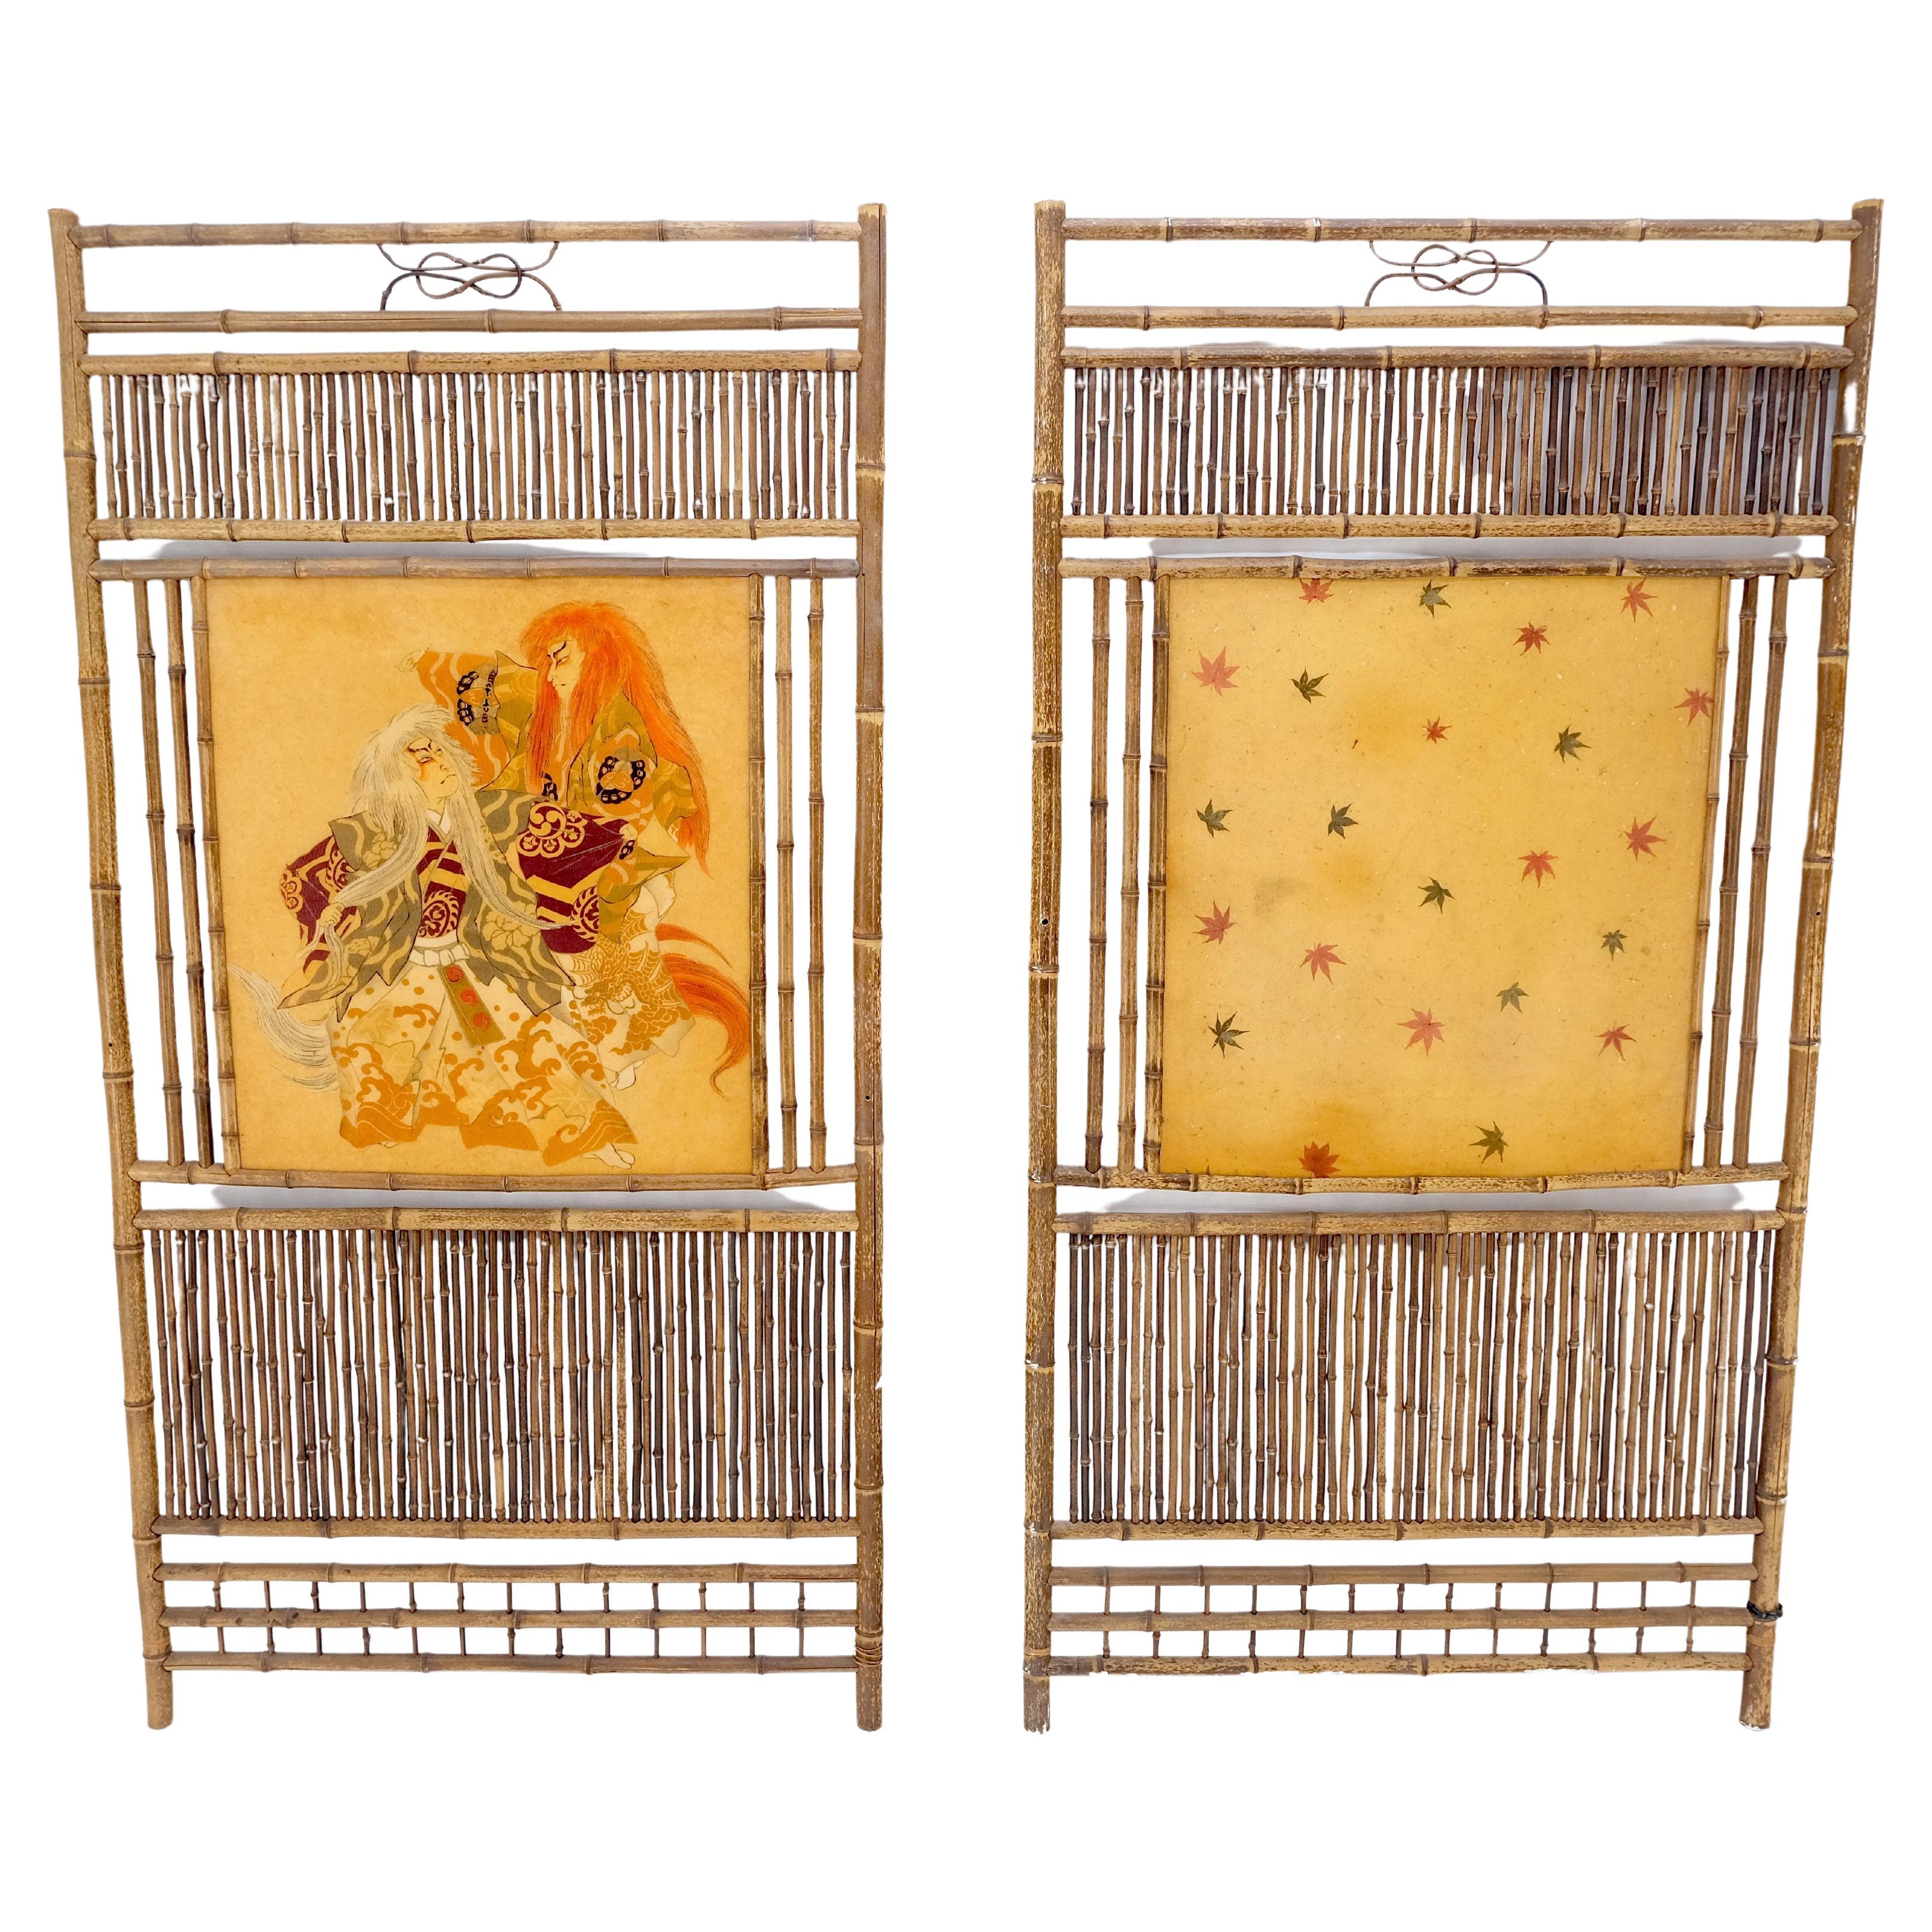 Pair of Japanese Modern Bamboo Room Dividers Screens Decorative Panels Wall Art